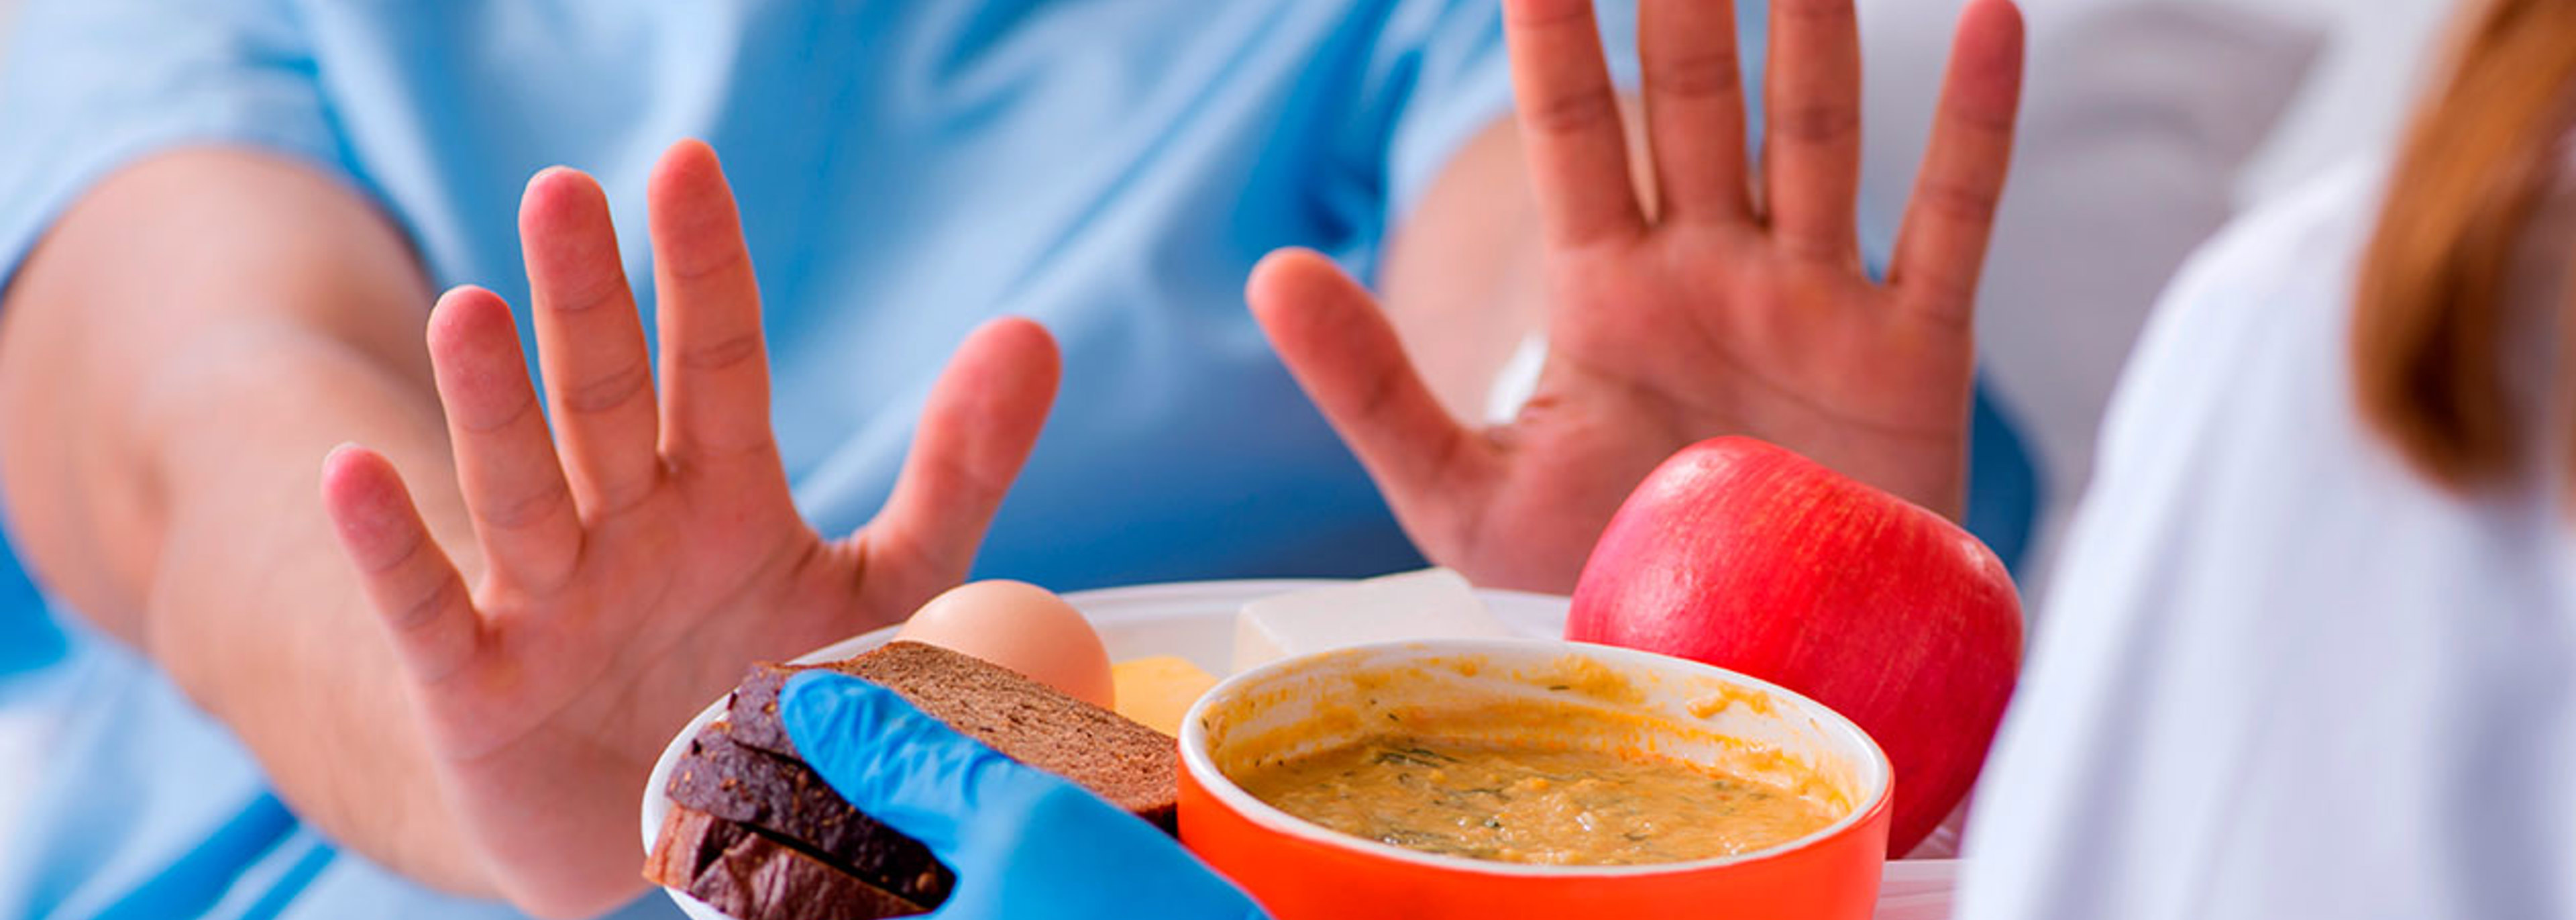 Food is medicine, hospital meals review finds